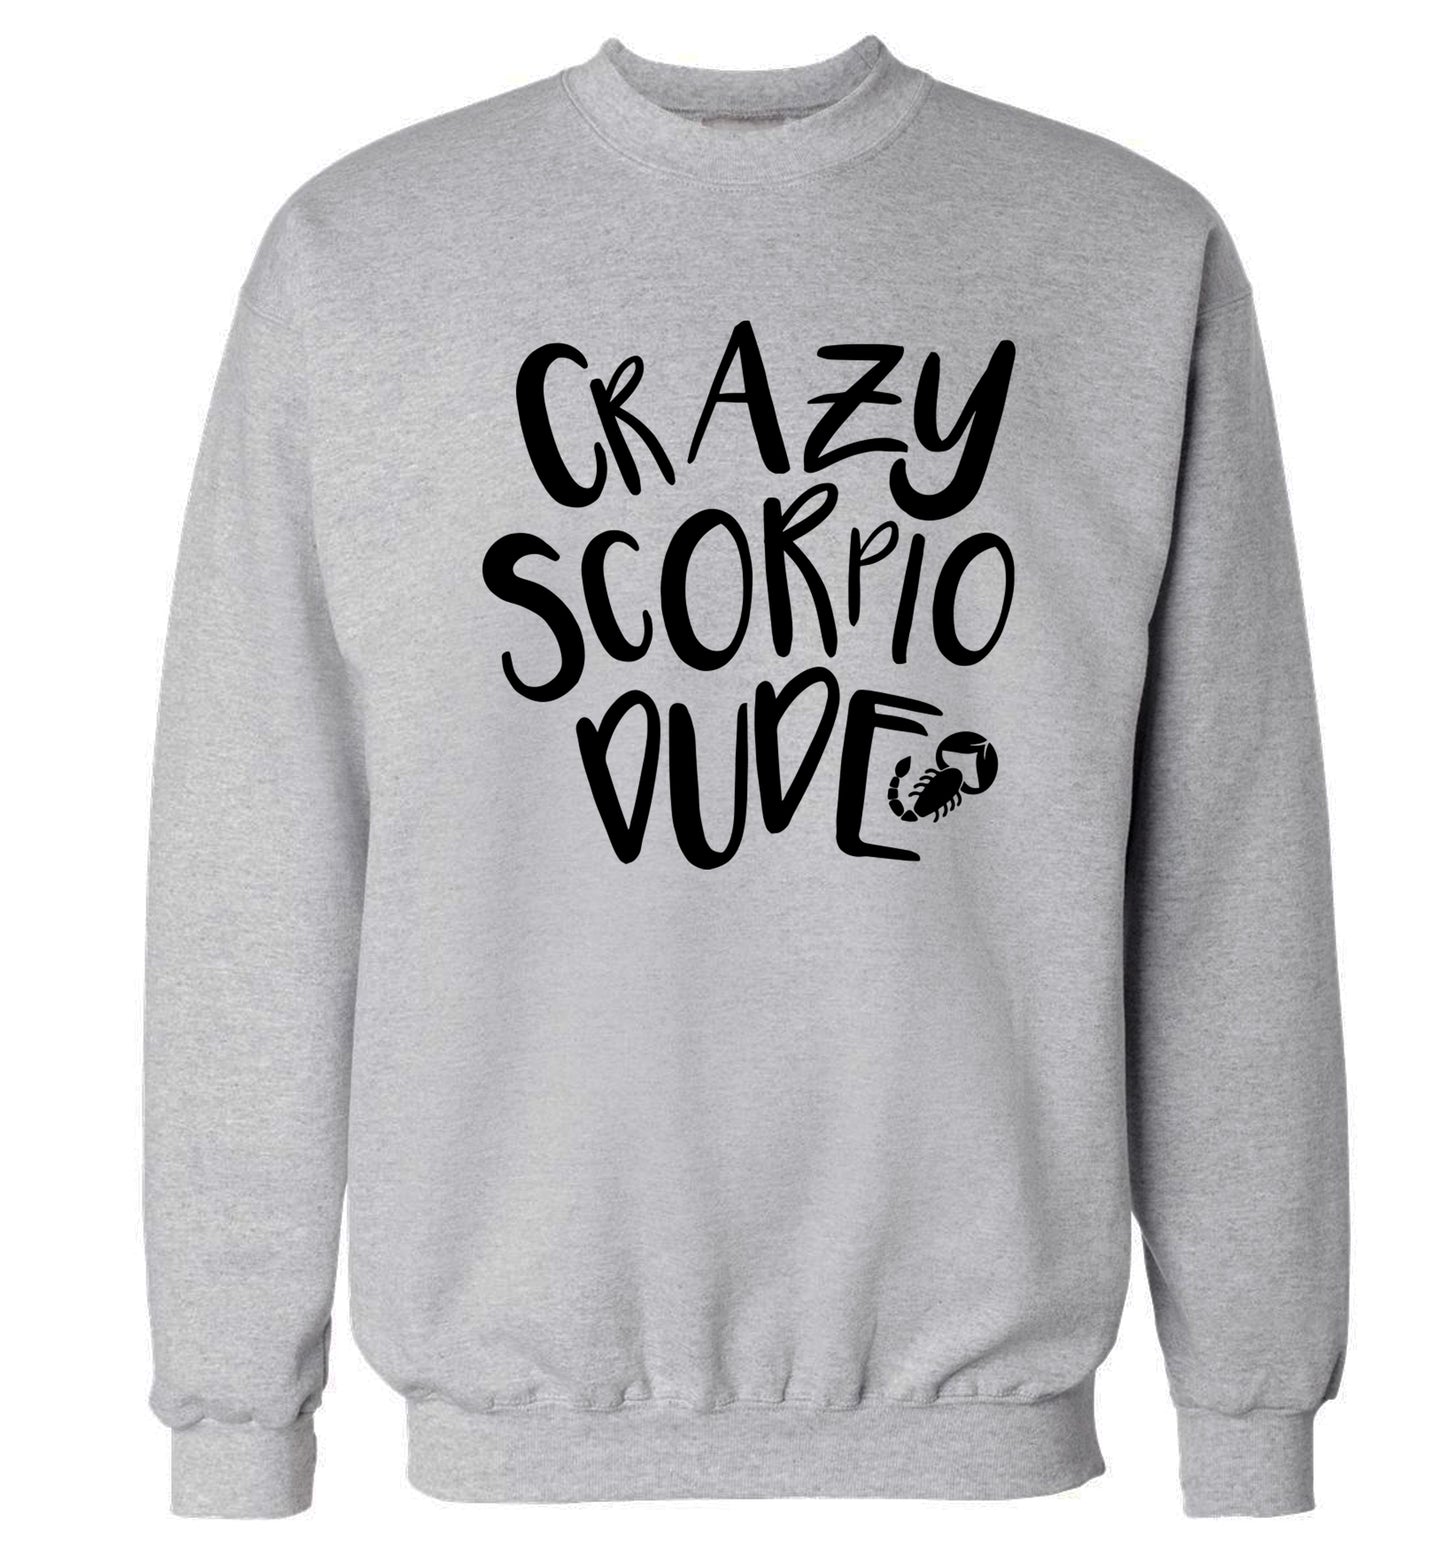 Crazy scorpio dude Adult's unisex grey Sweater 2XL